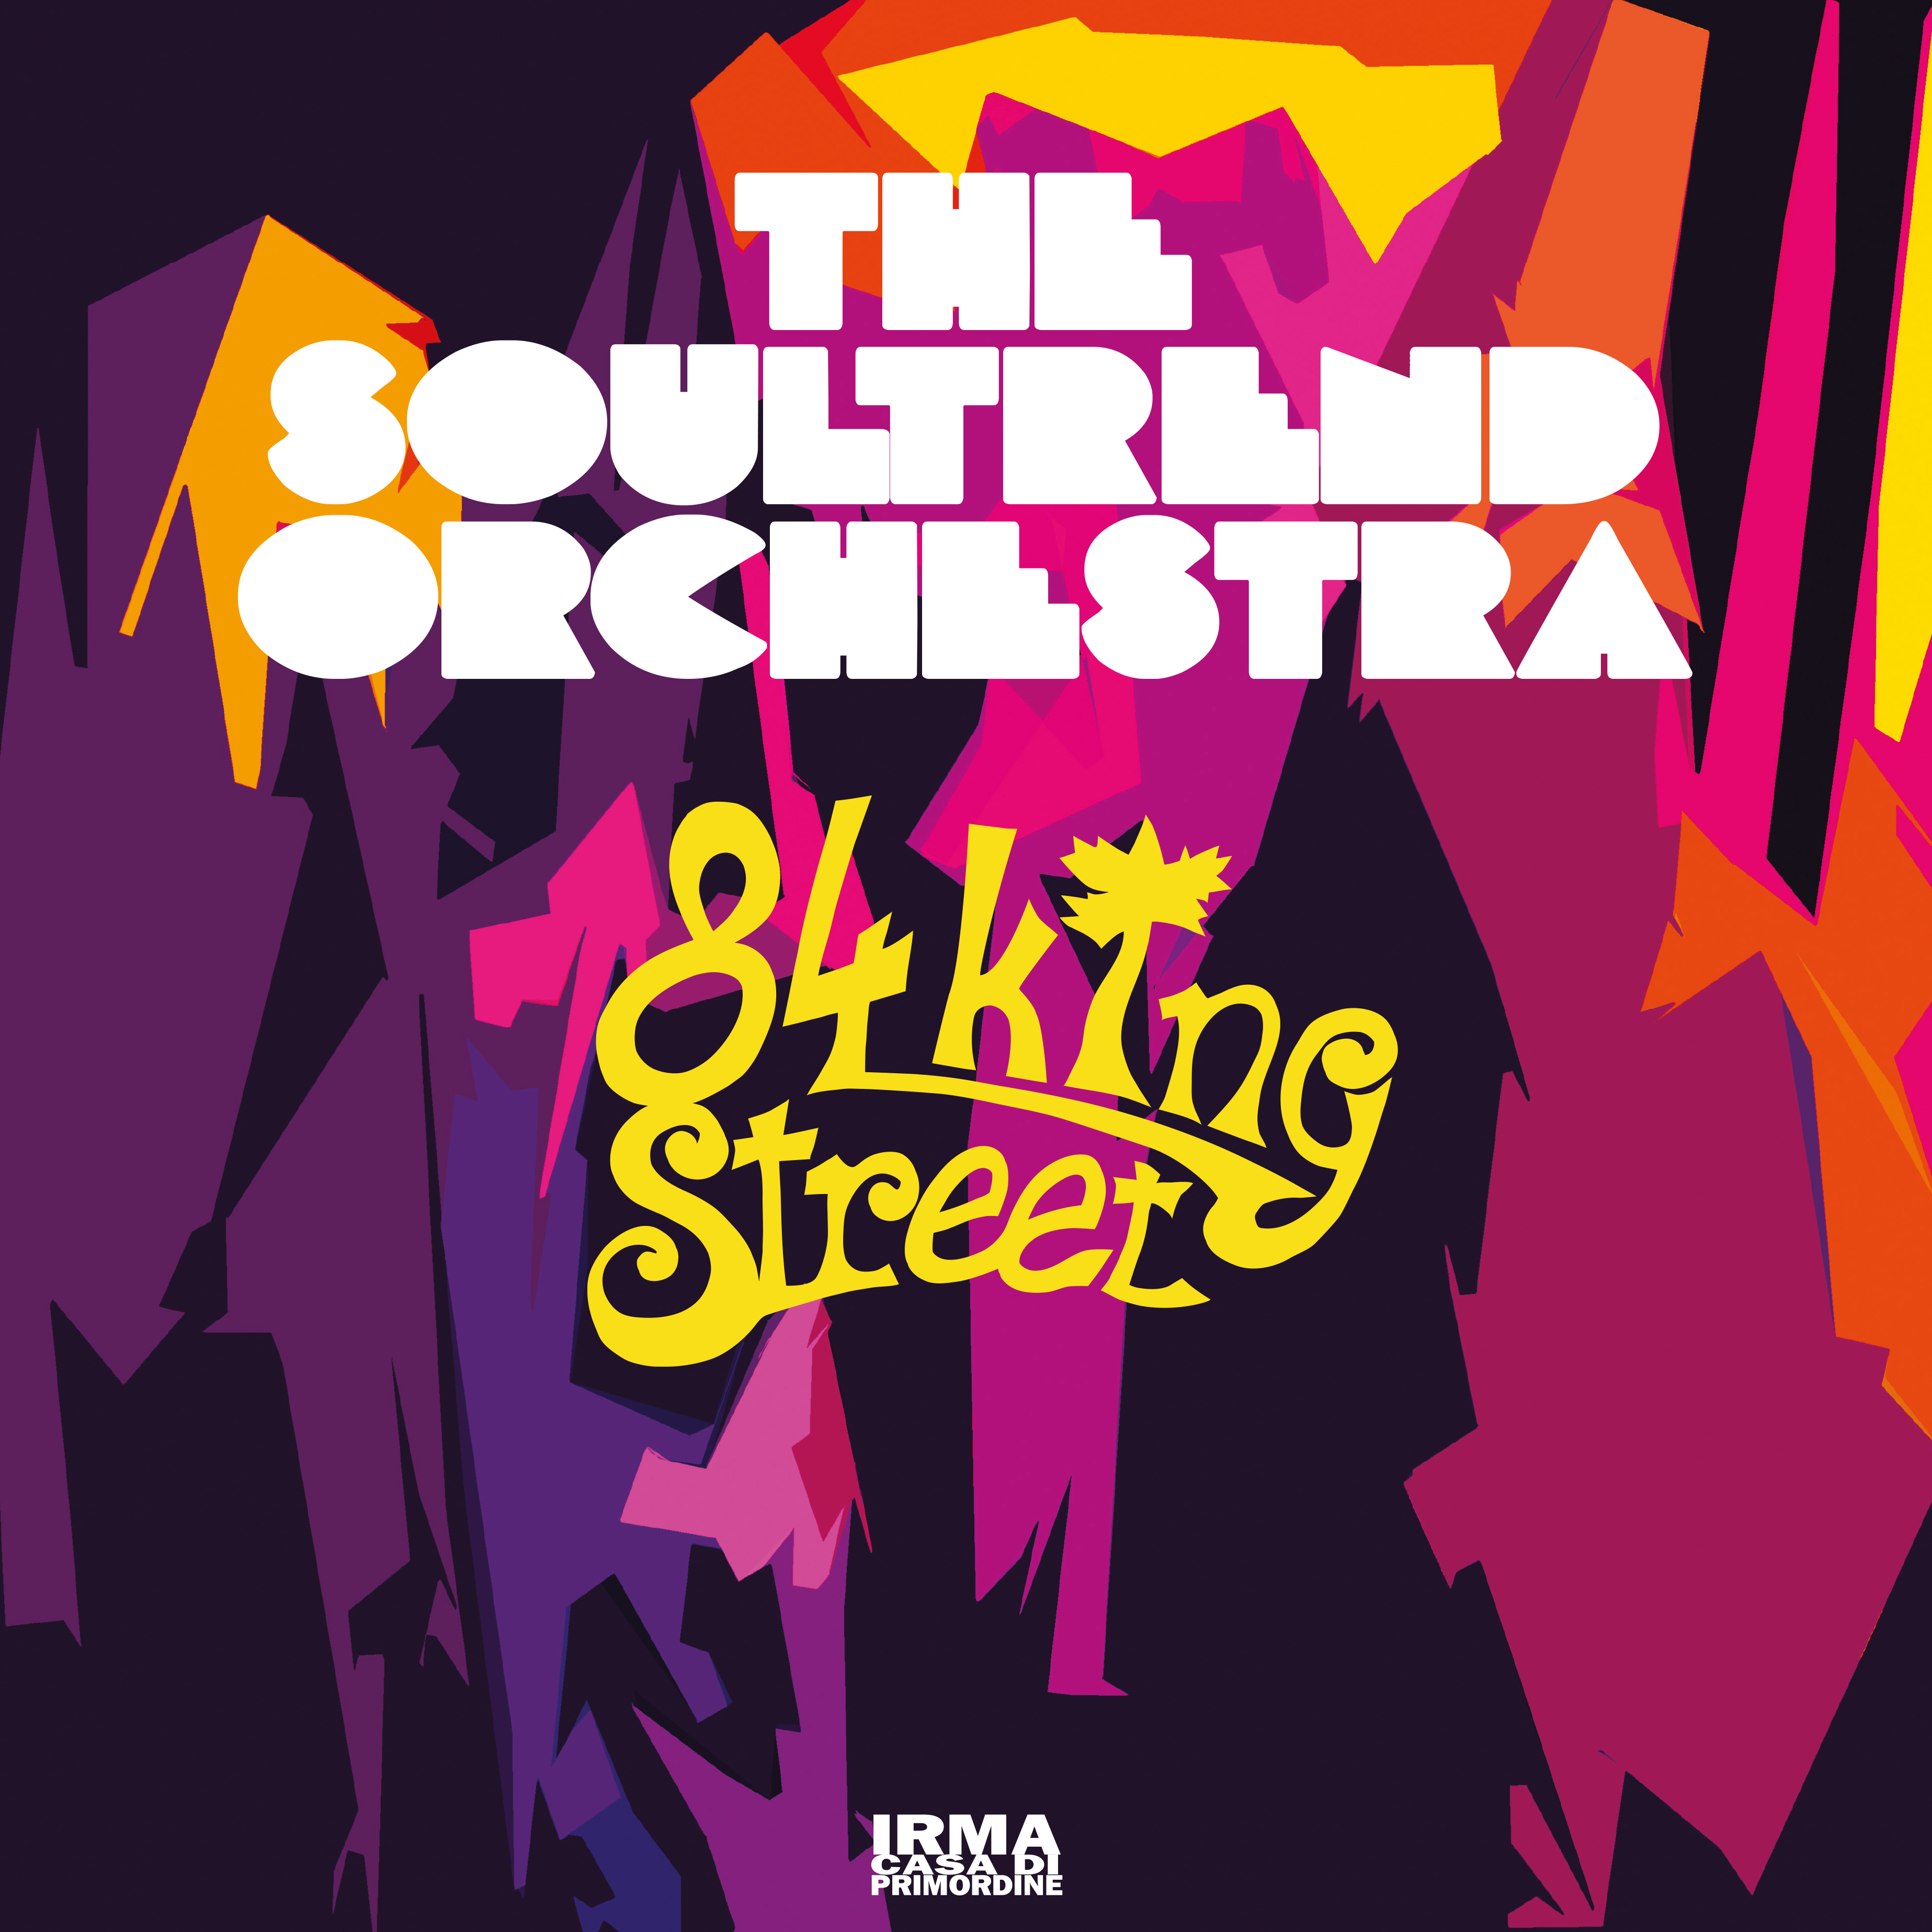 84 King Street (vinyl)